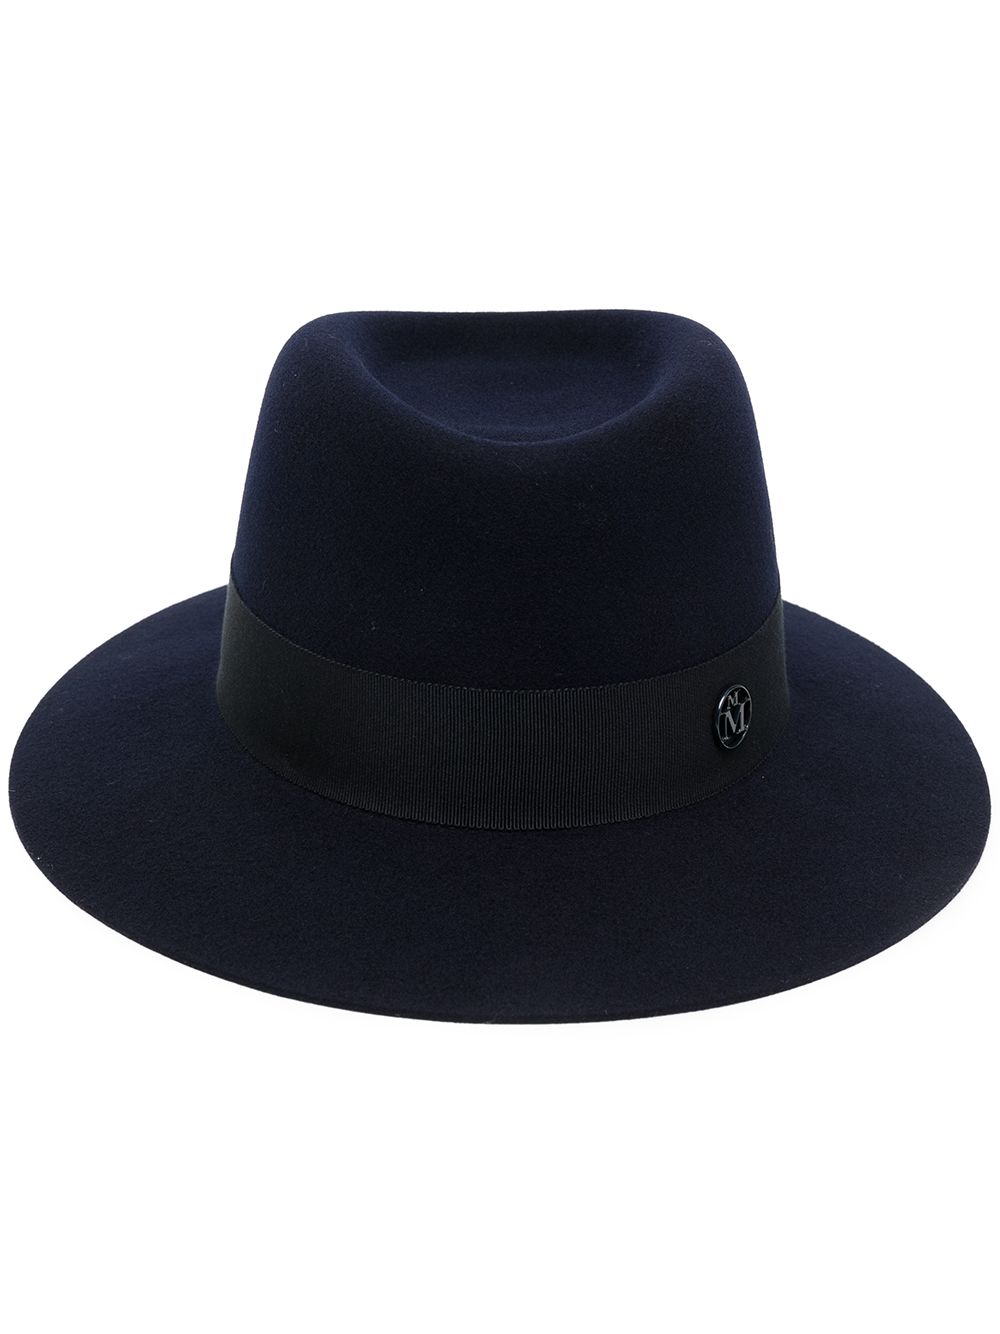 Image 1 of Maison Michel Andre fedora hat